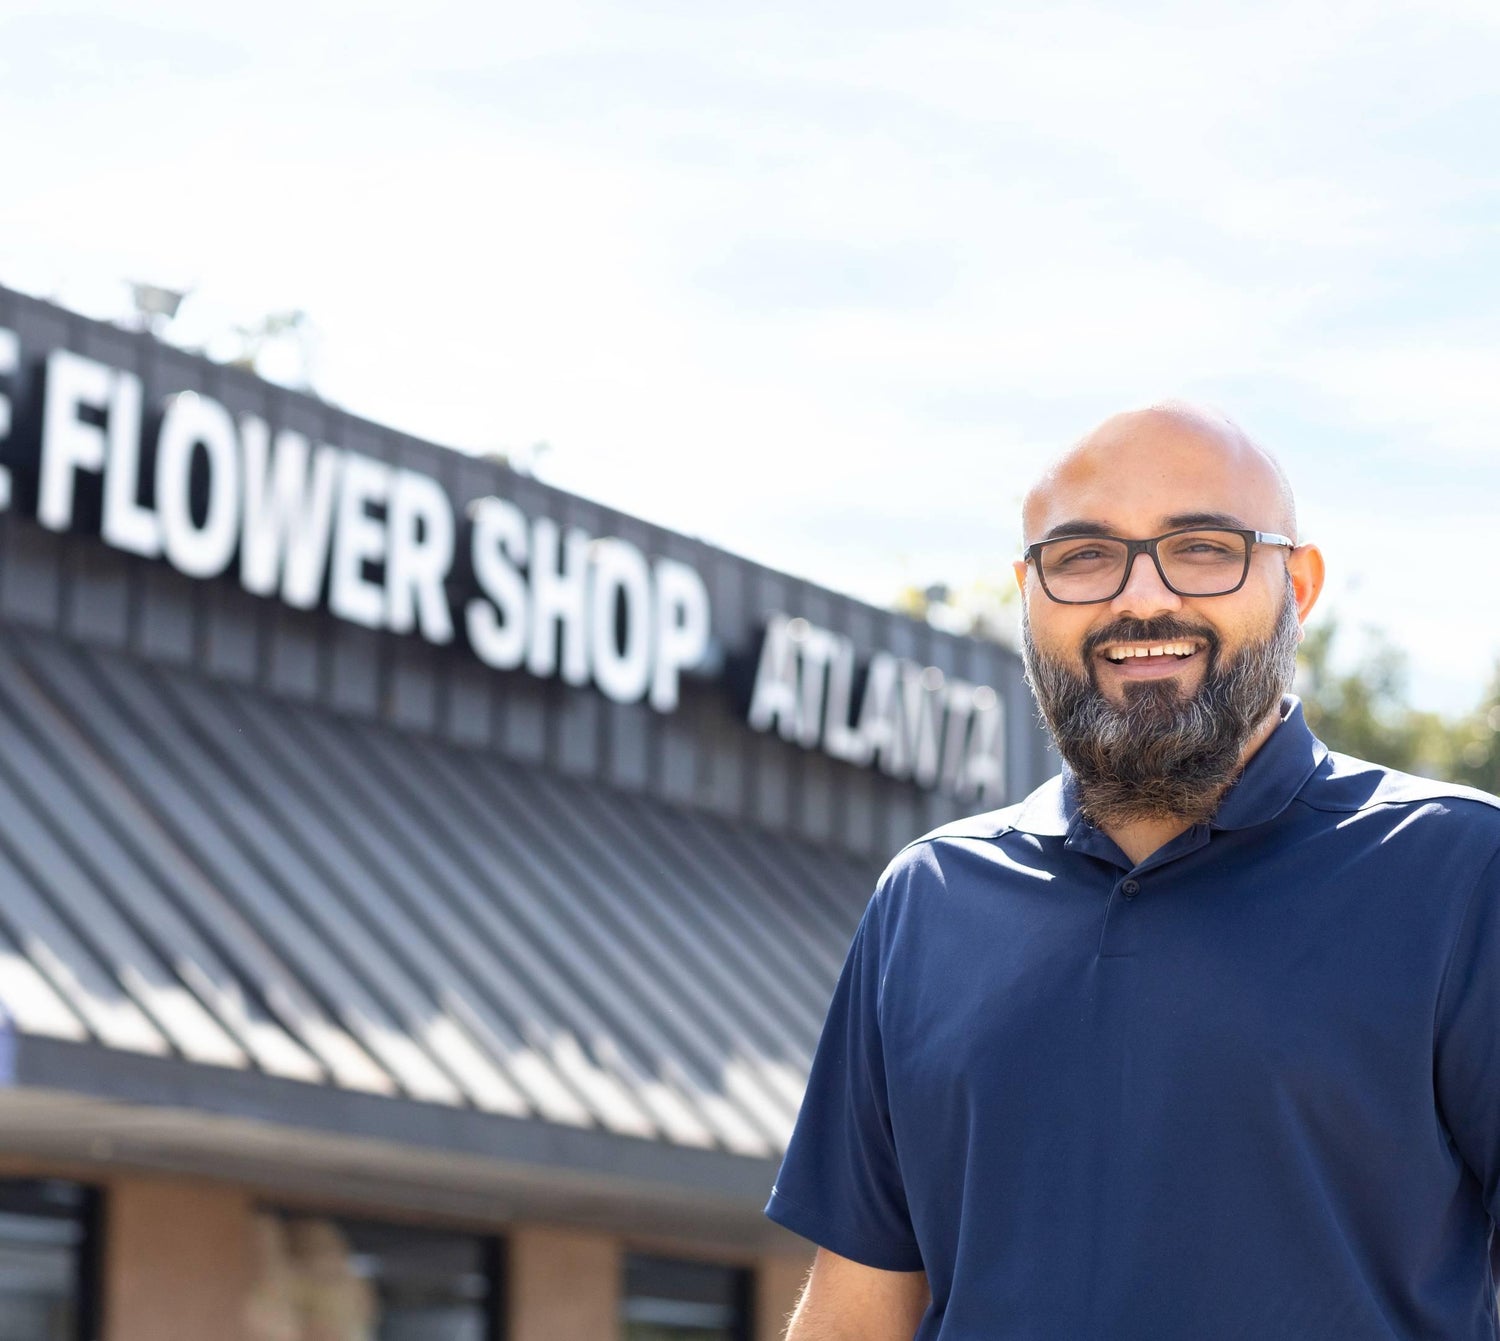 The Flower Shop Atlanta Featured in Doordash - The Flower Shop Atlanta